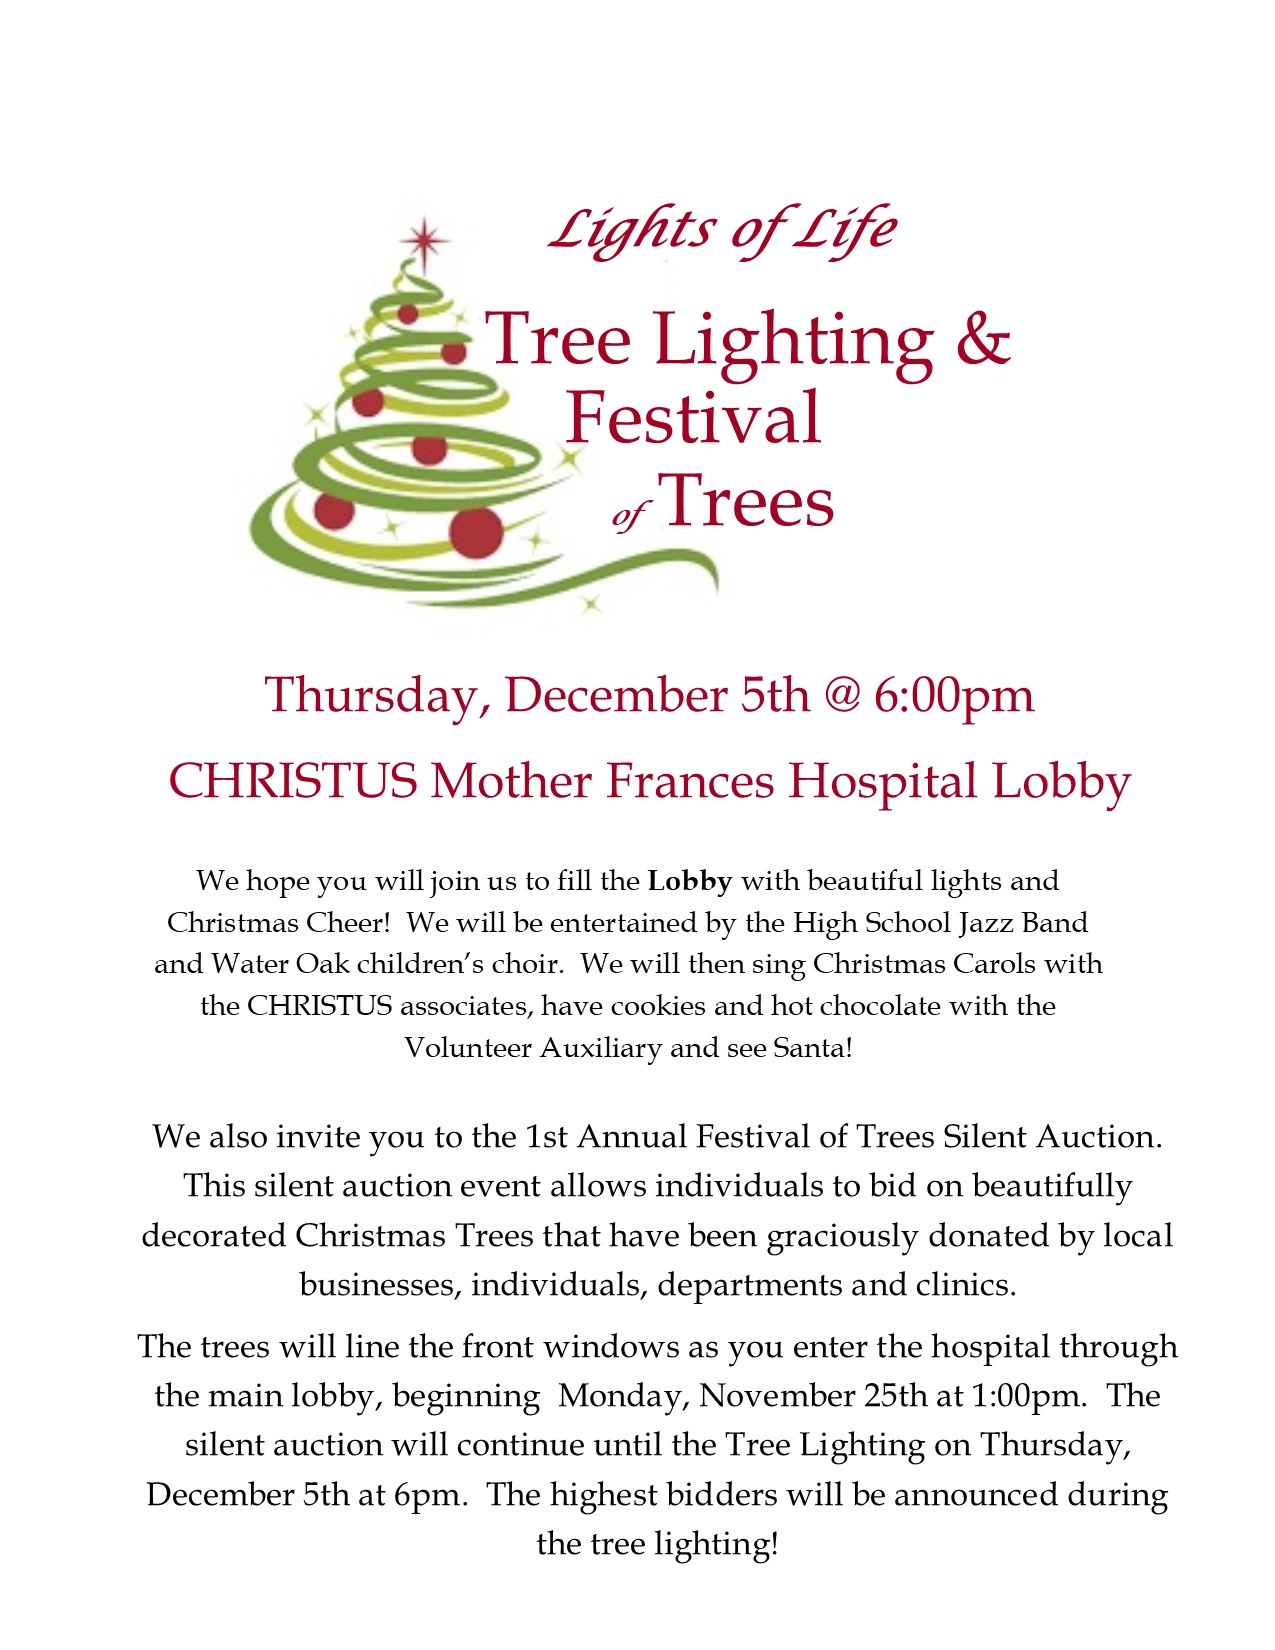 Hopkins County Healthcare Foundation Hosting Lights of Life Tree Lighting on Thursday December 5th